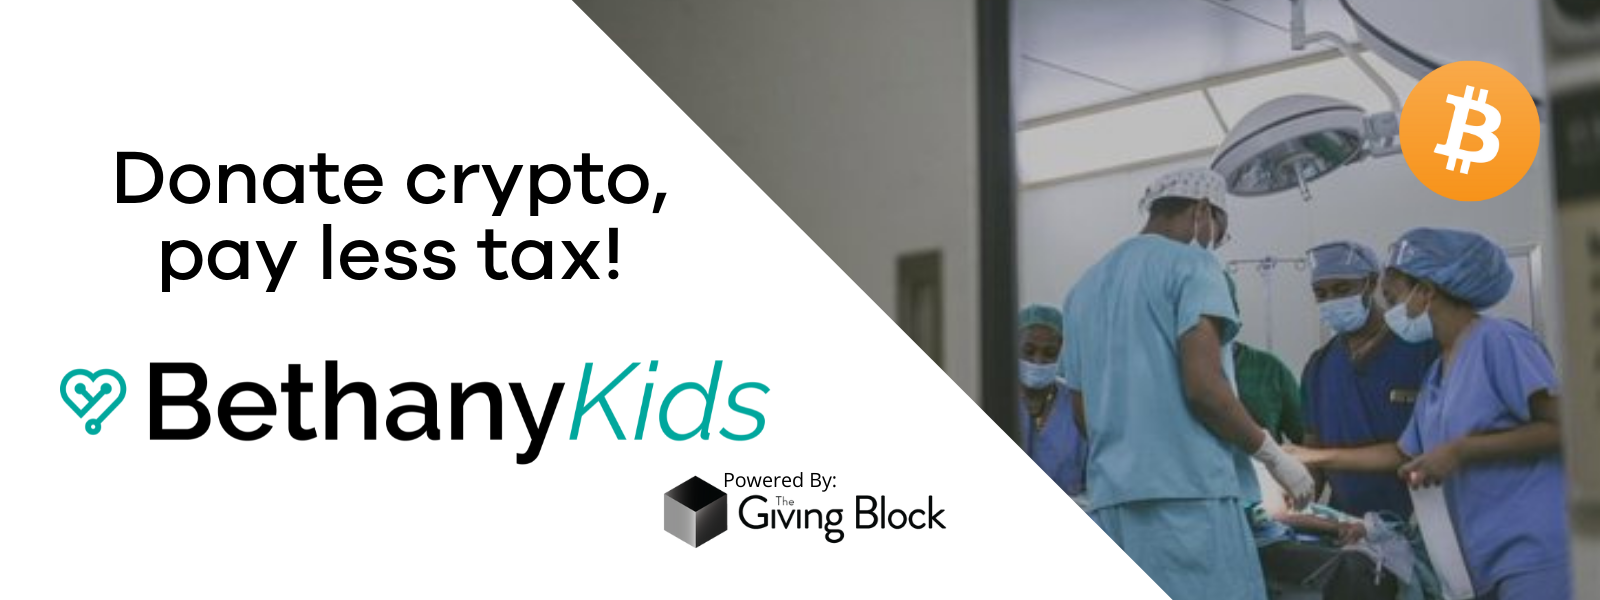 Donate Crypto to BethanyKids